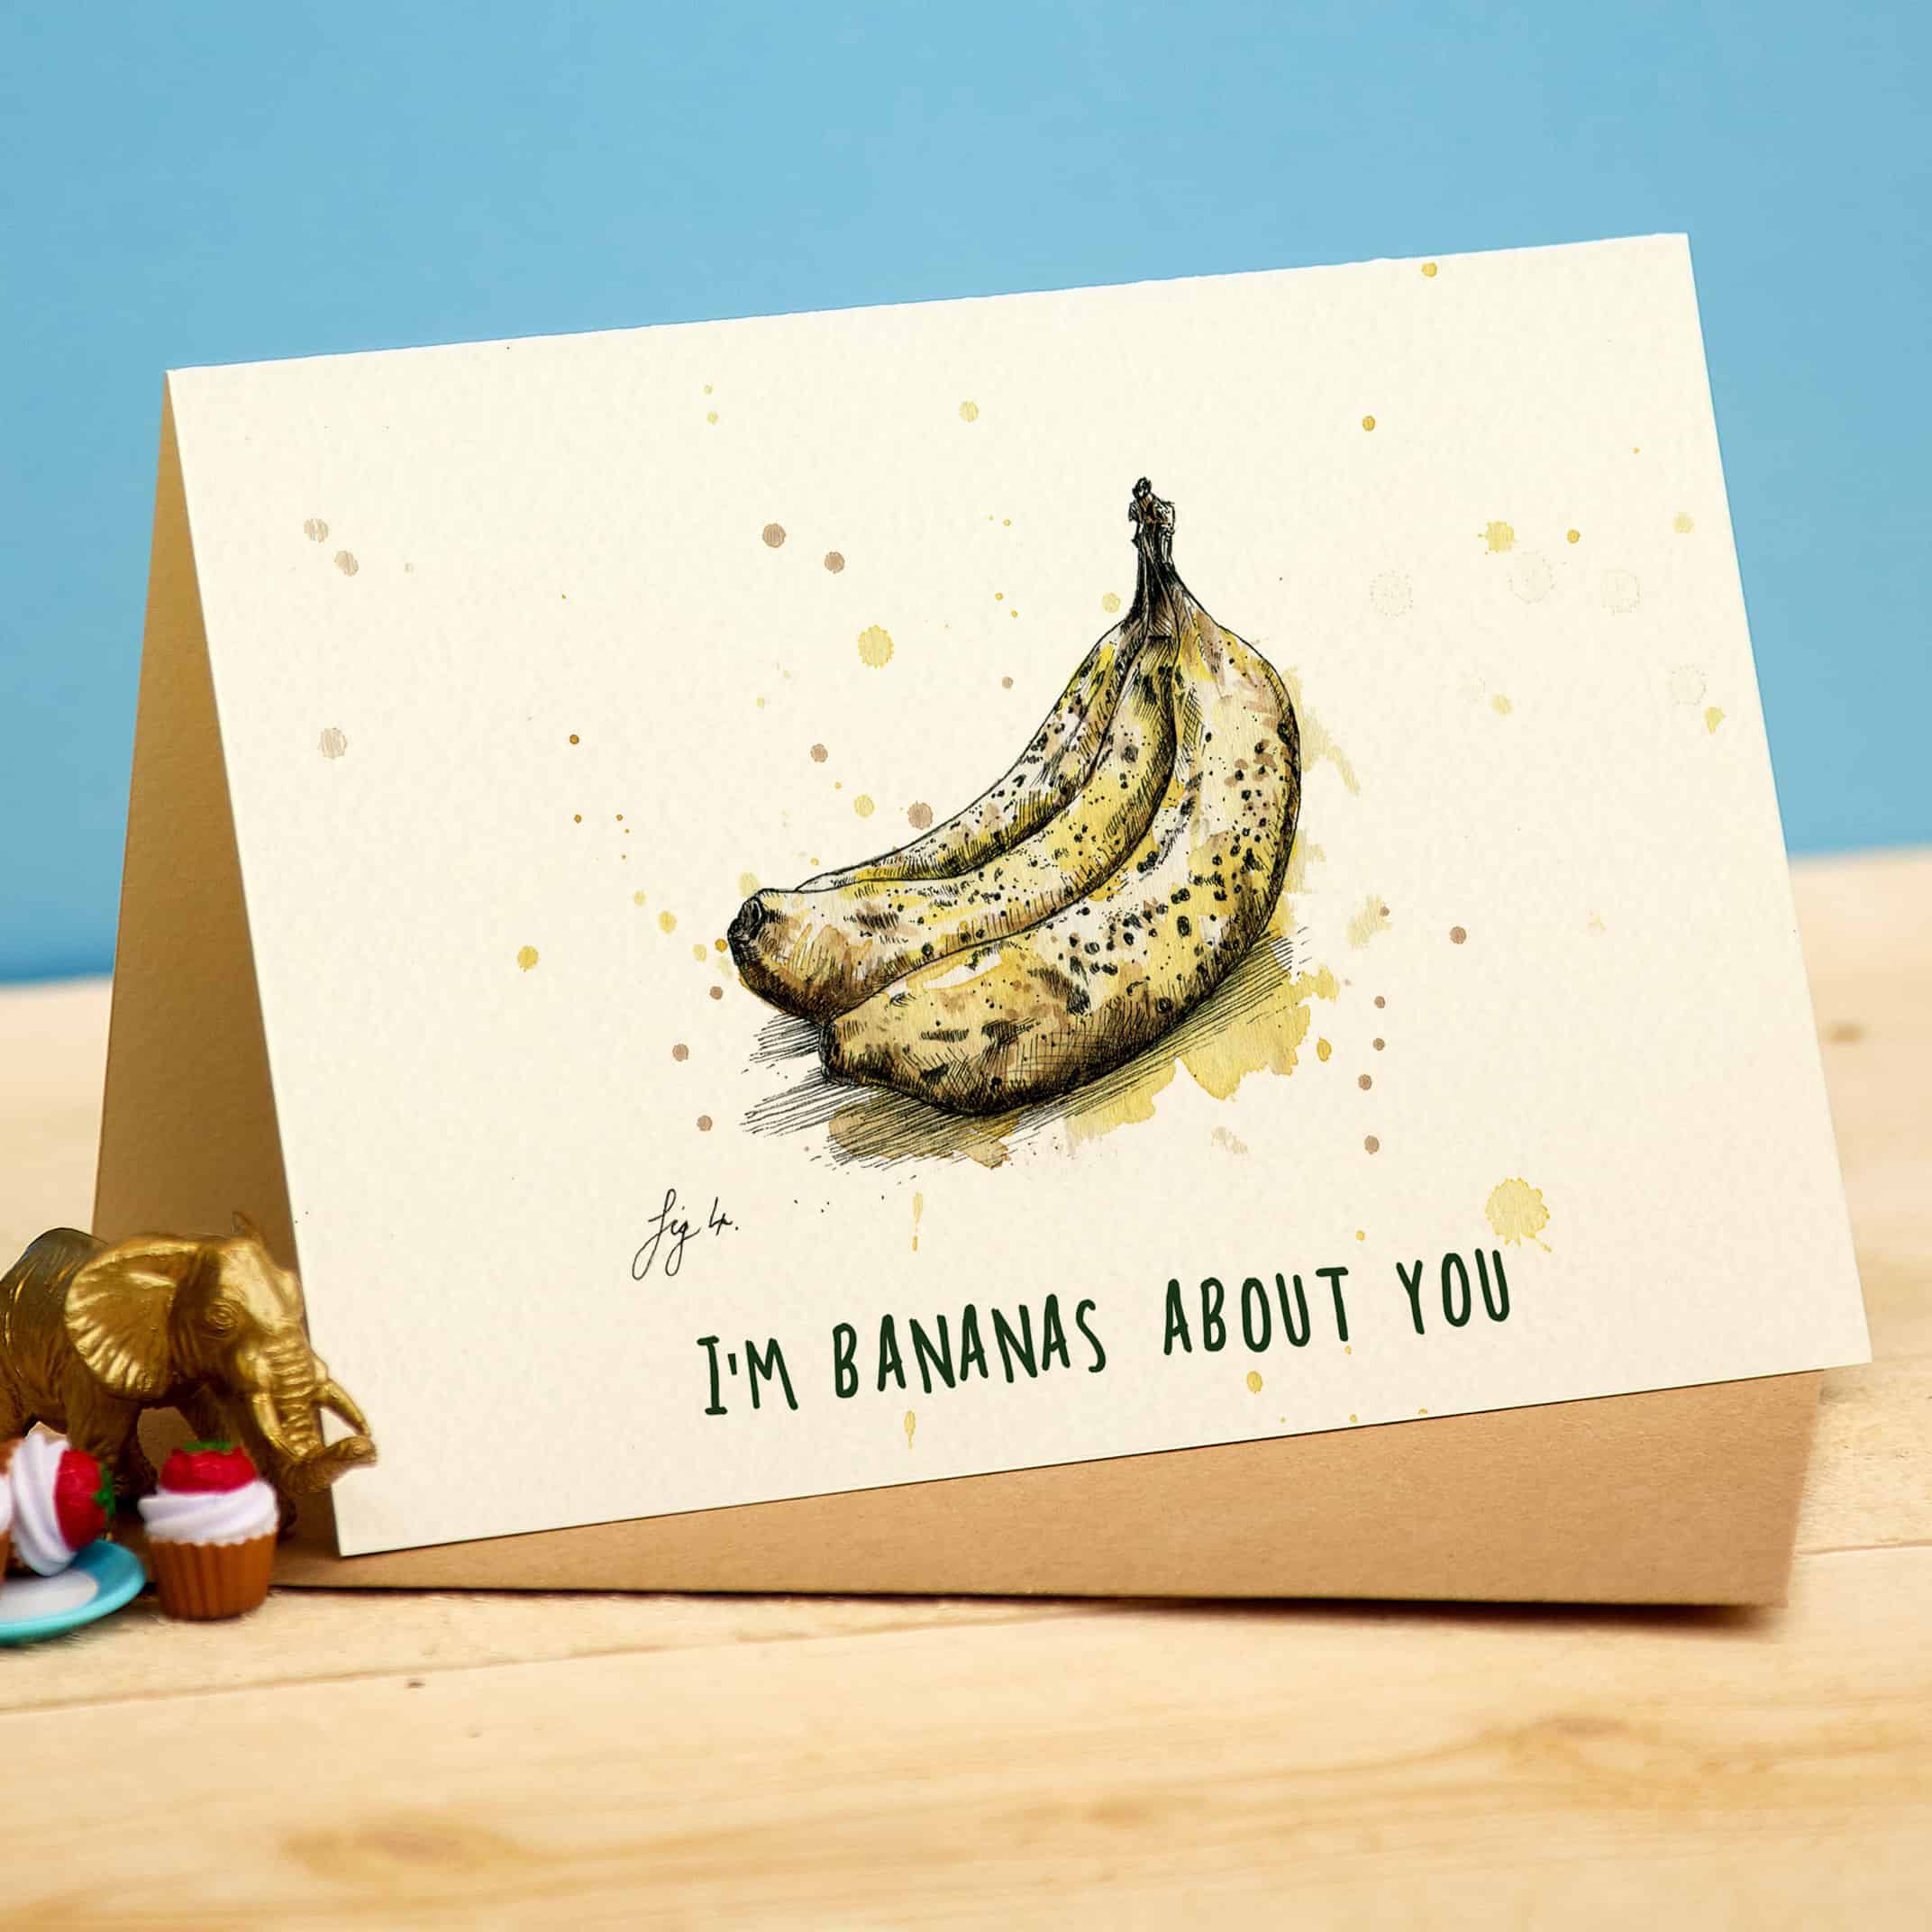 Wenskaart "Bananas about you" - Fairy Positron